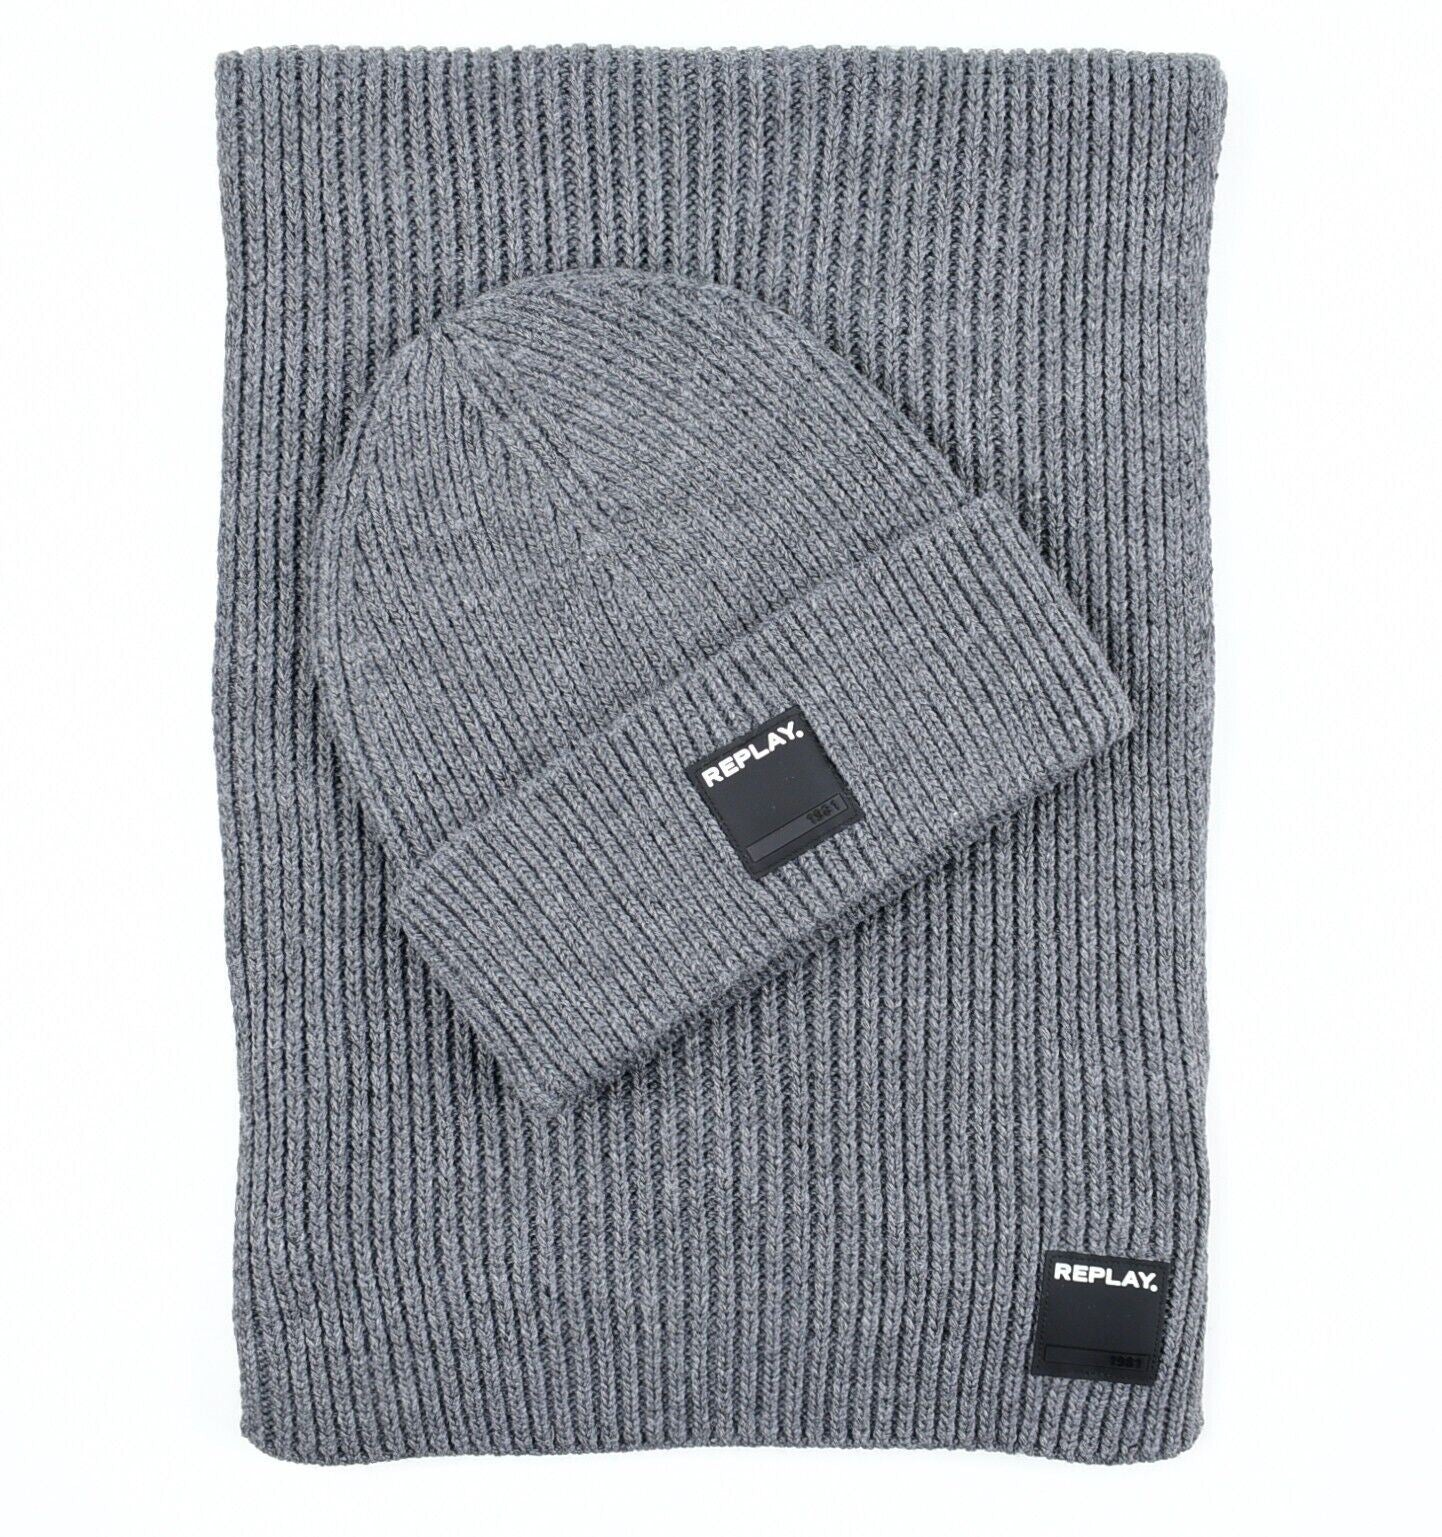 REPLAY Men's 2-pc Winter Accessory Set, Scarf + Beanie Hat, Grey *damaged box*